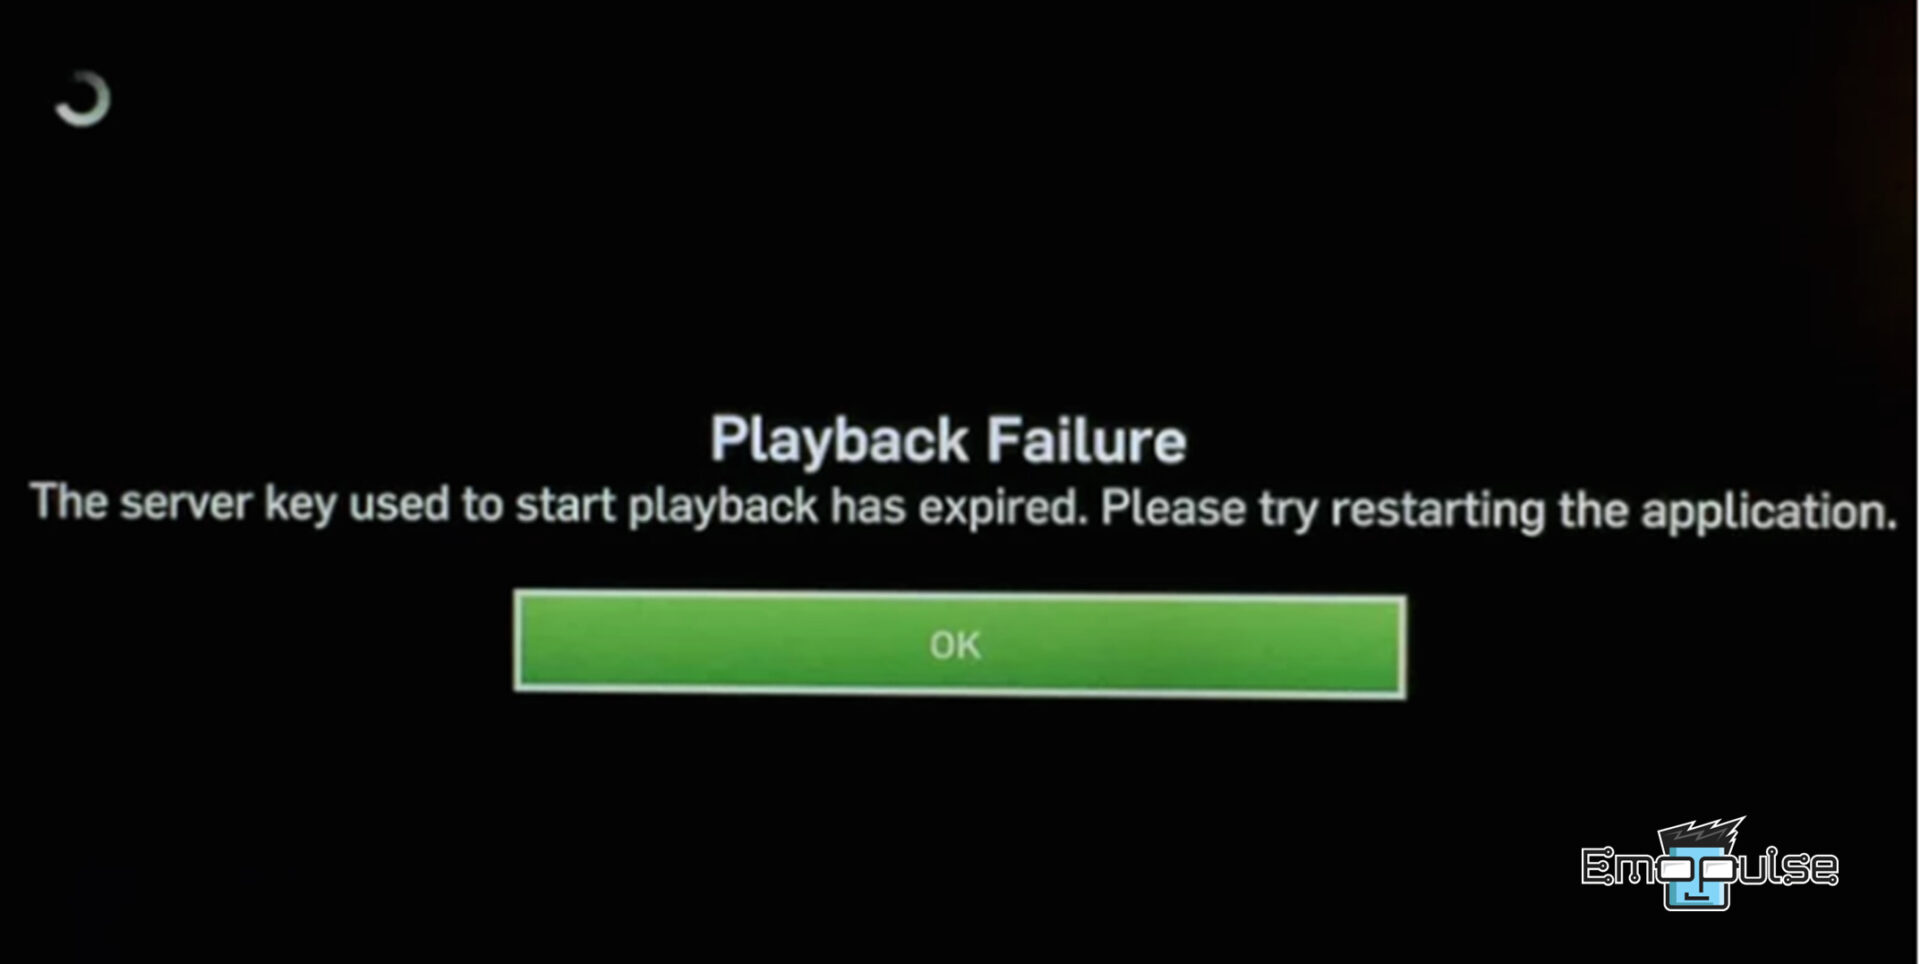 Hulu Server Key Expired error message